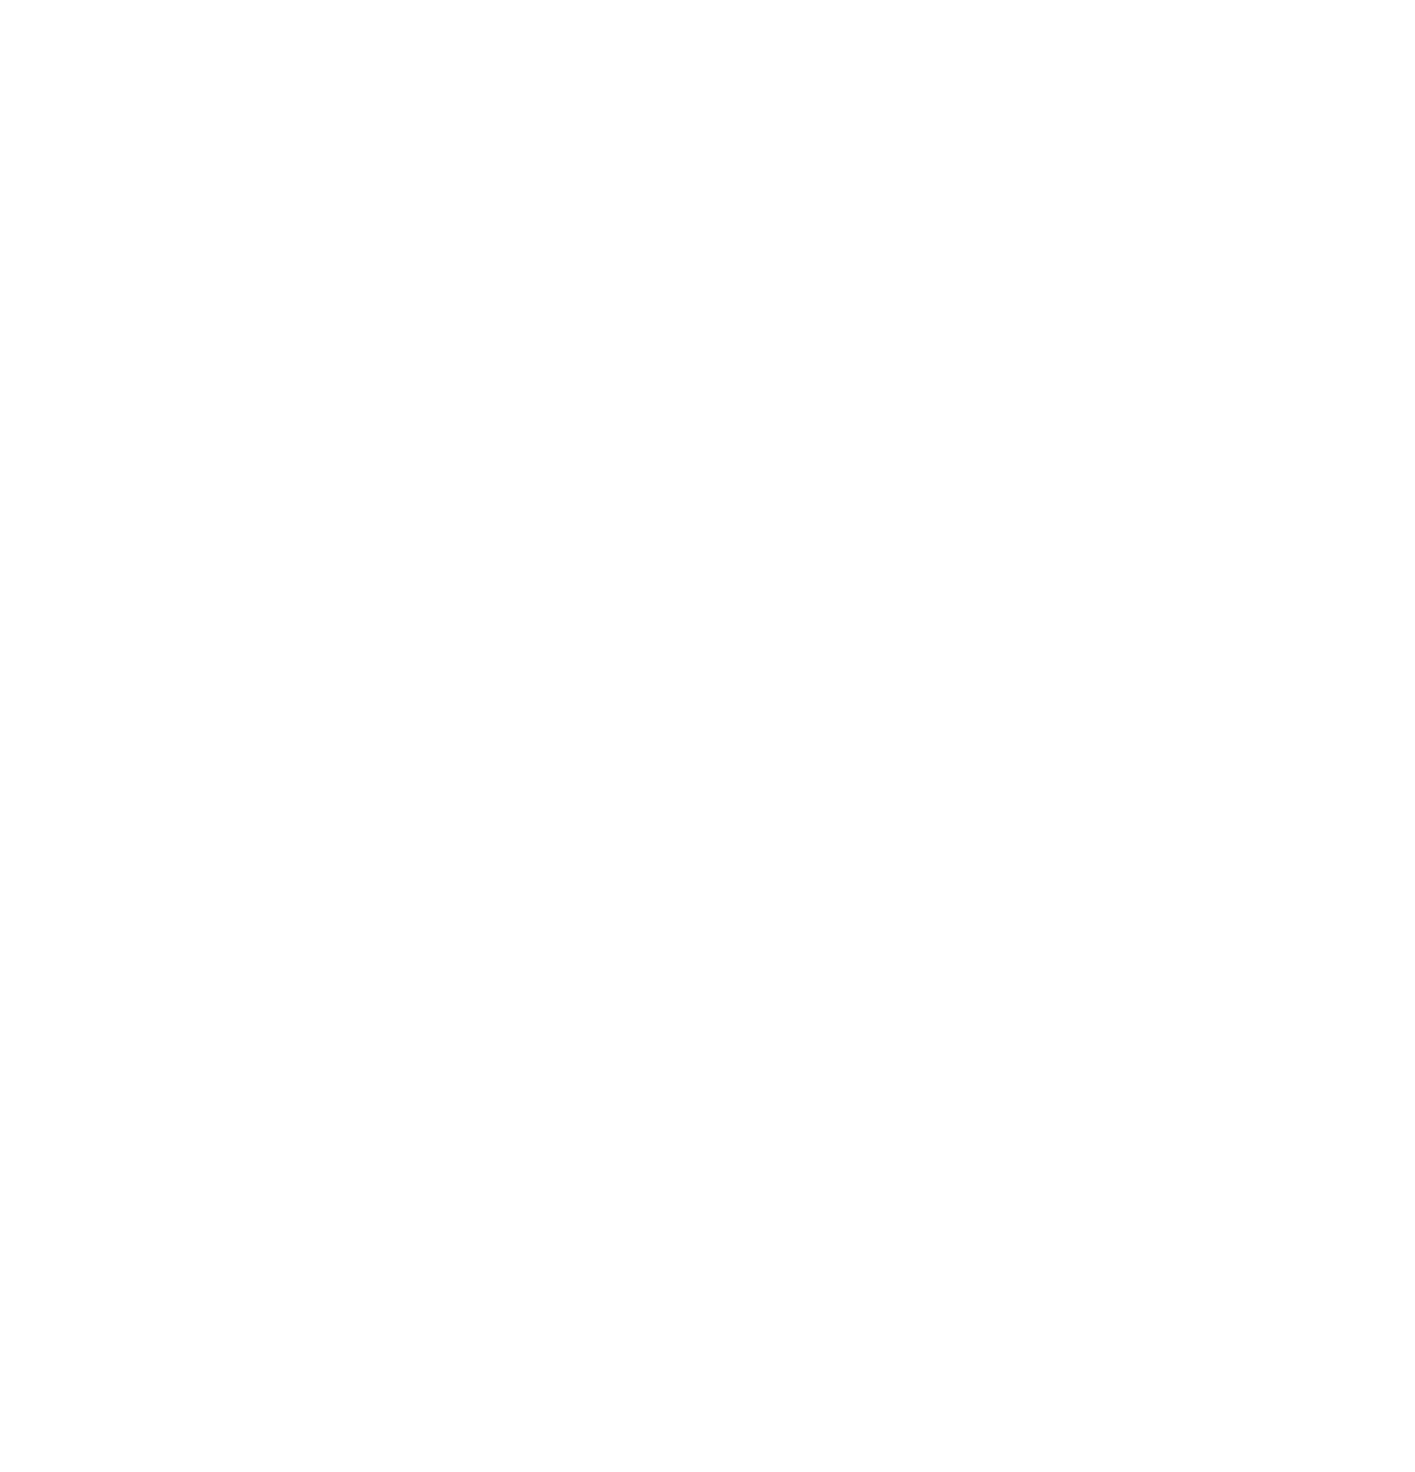 Digital Asset Experts